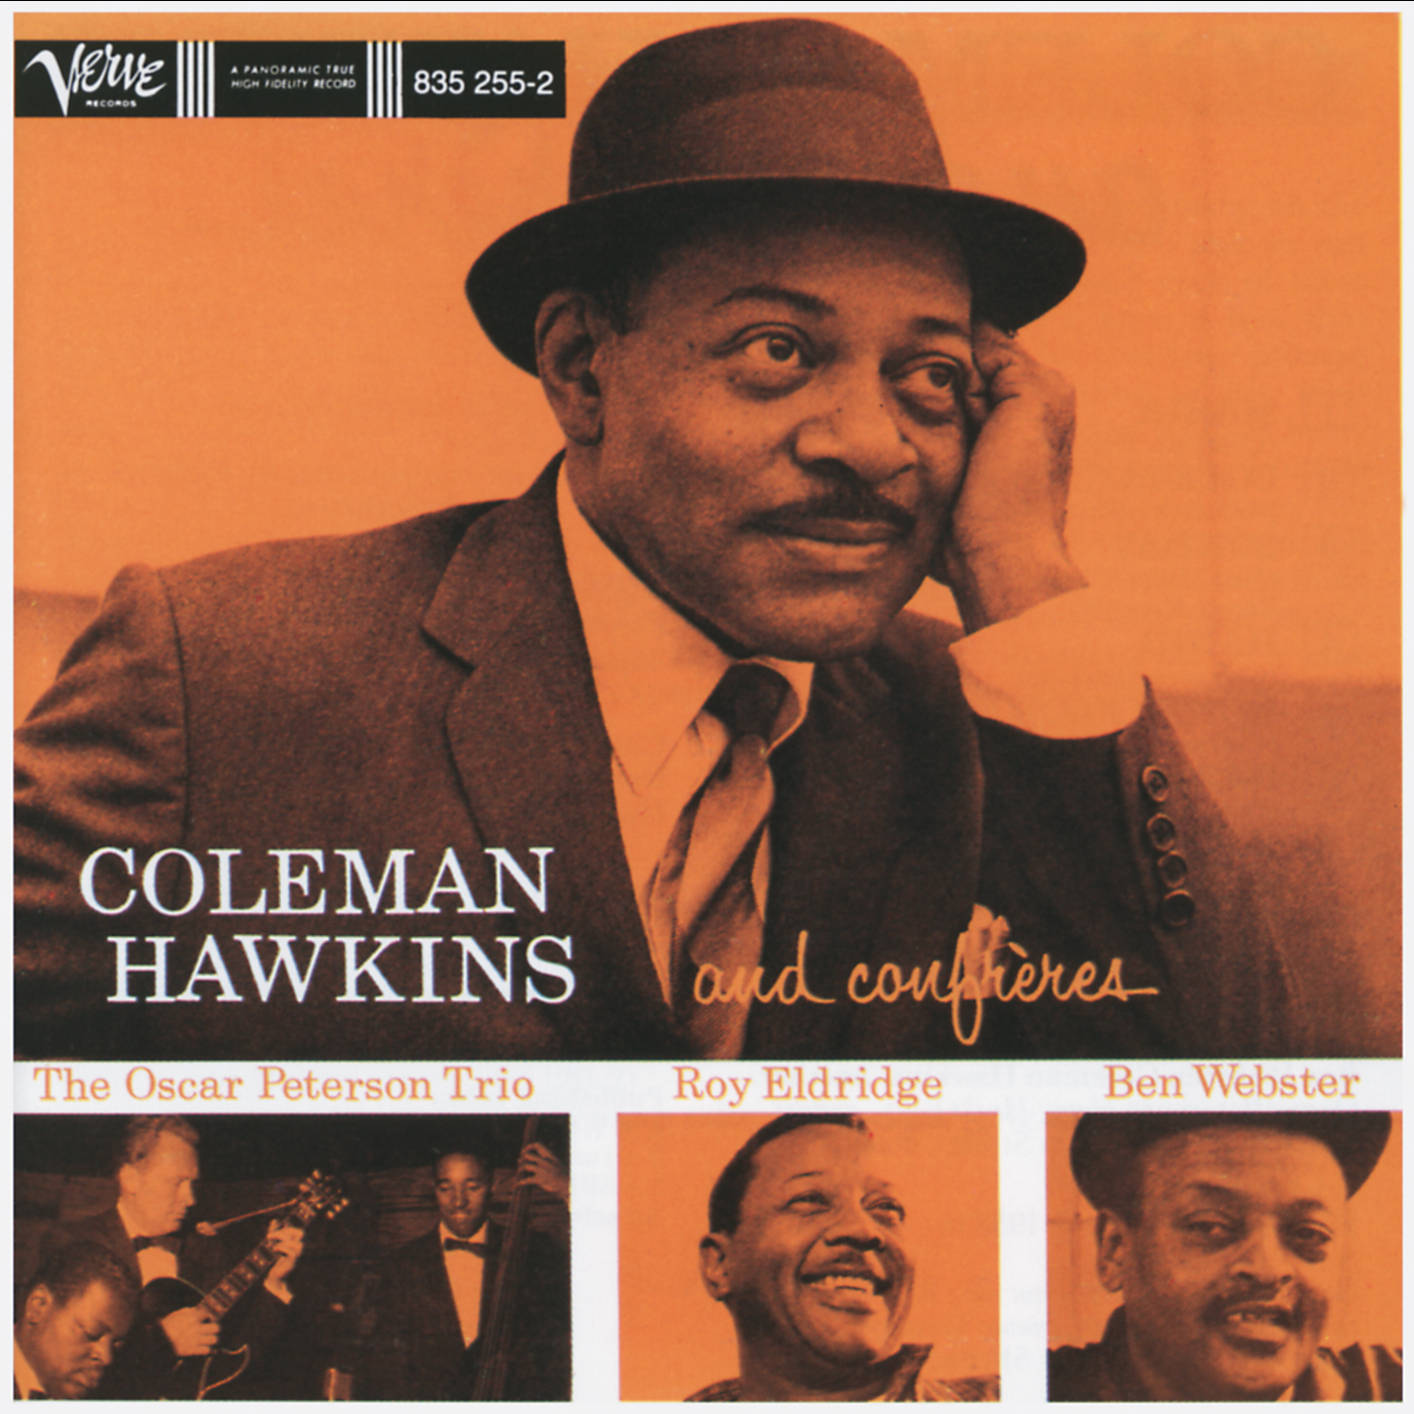 Coleman Hawkins og Confrères Album Plakat. Wallpaper